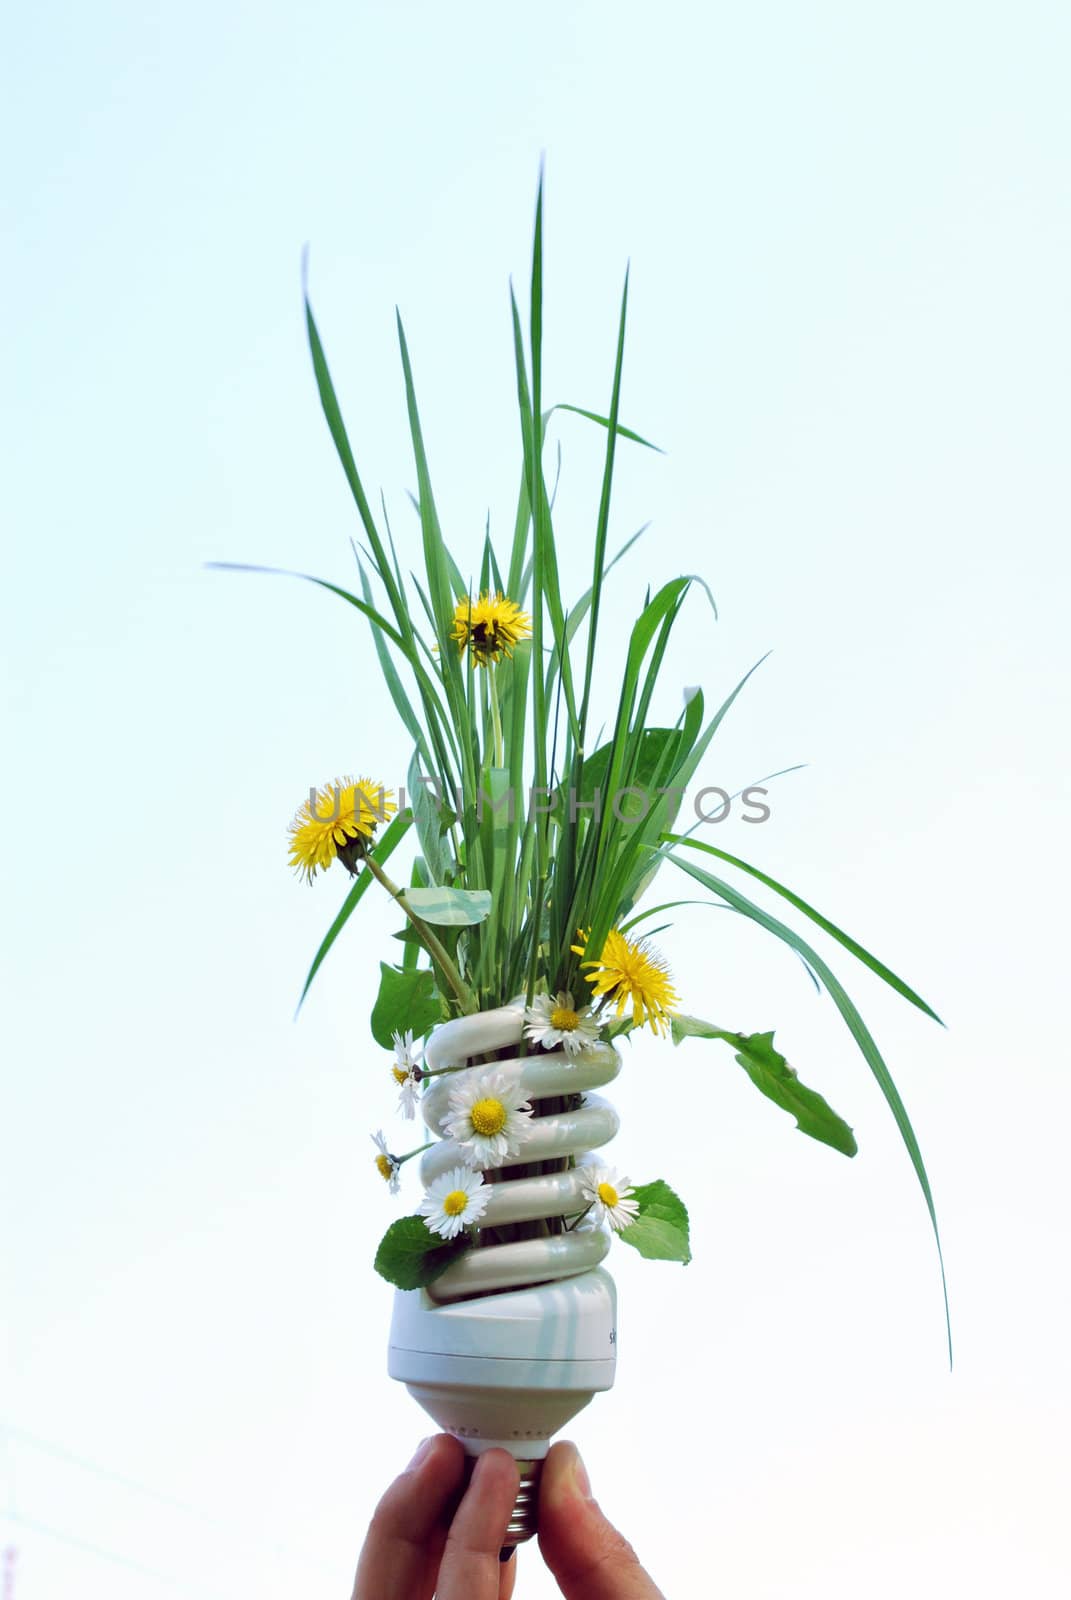 Eco Light Bulb With Flowers by tony4urban